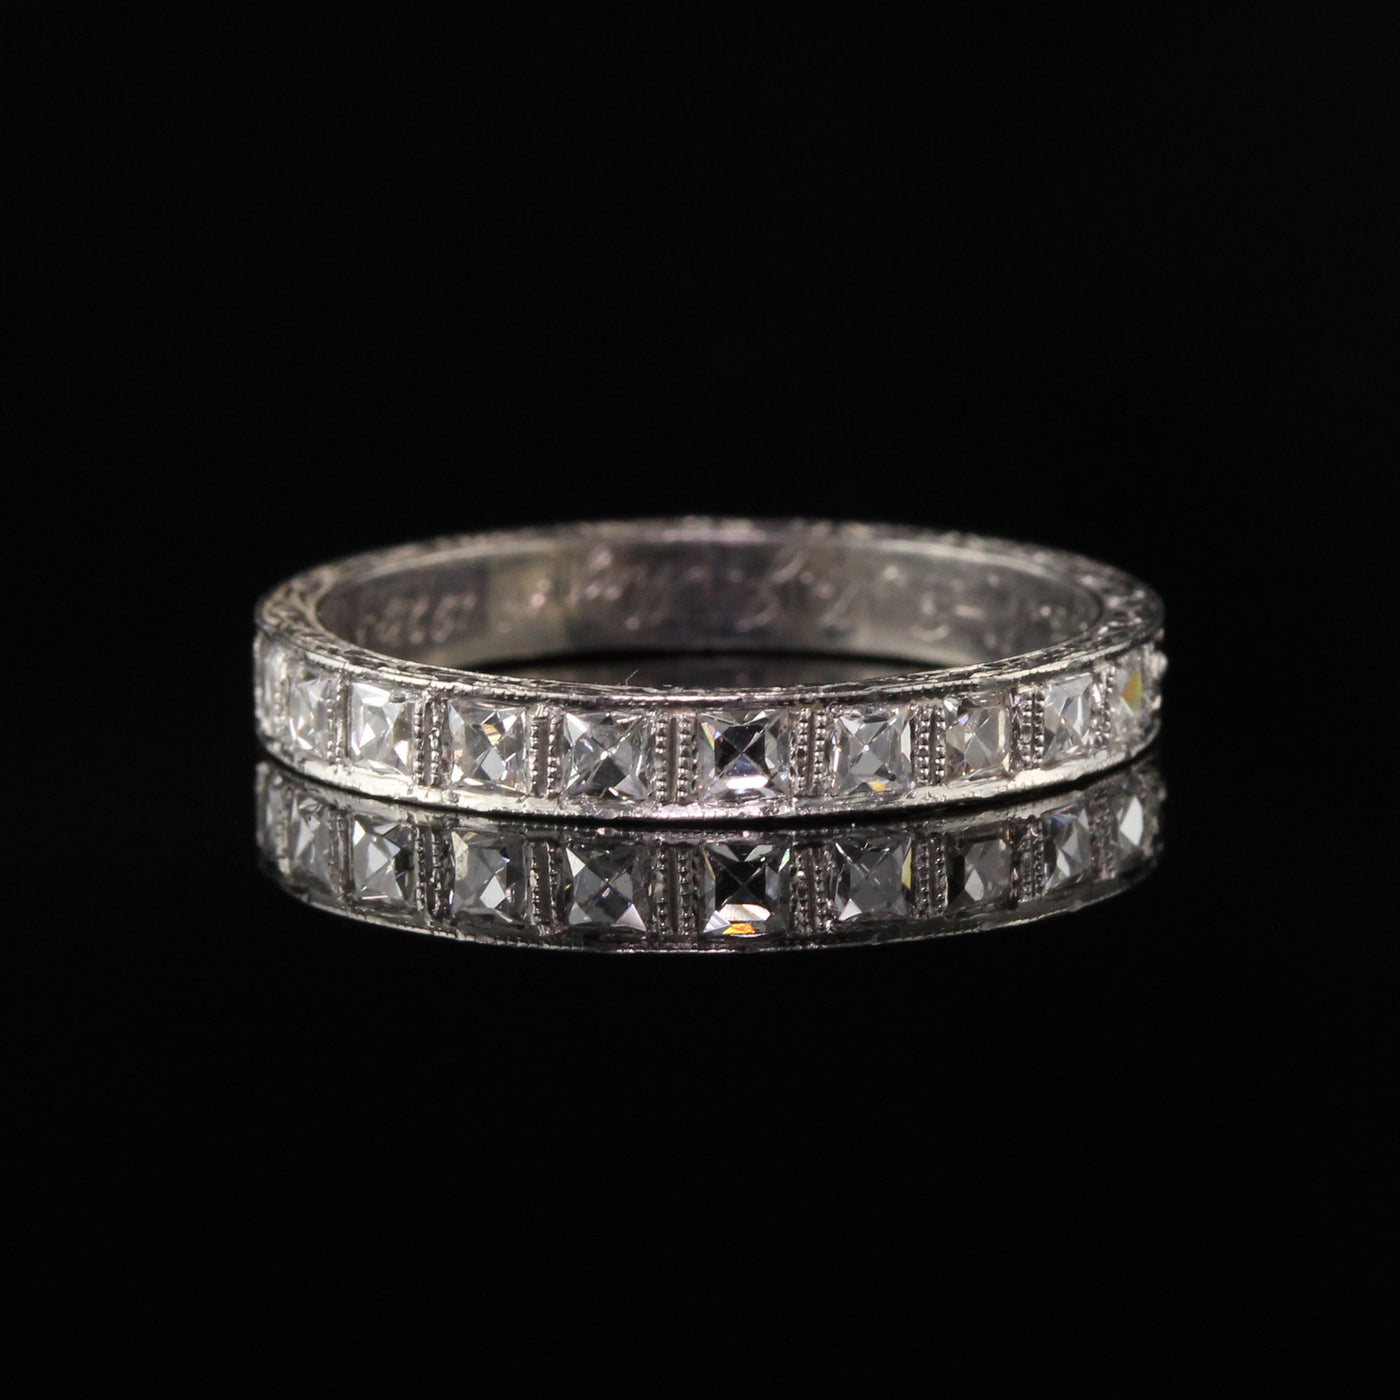 Antique Art Deco Platinum French Cut Diamond Band Ring - Size 5.5